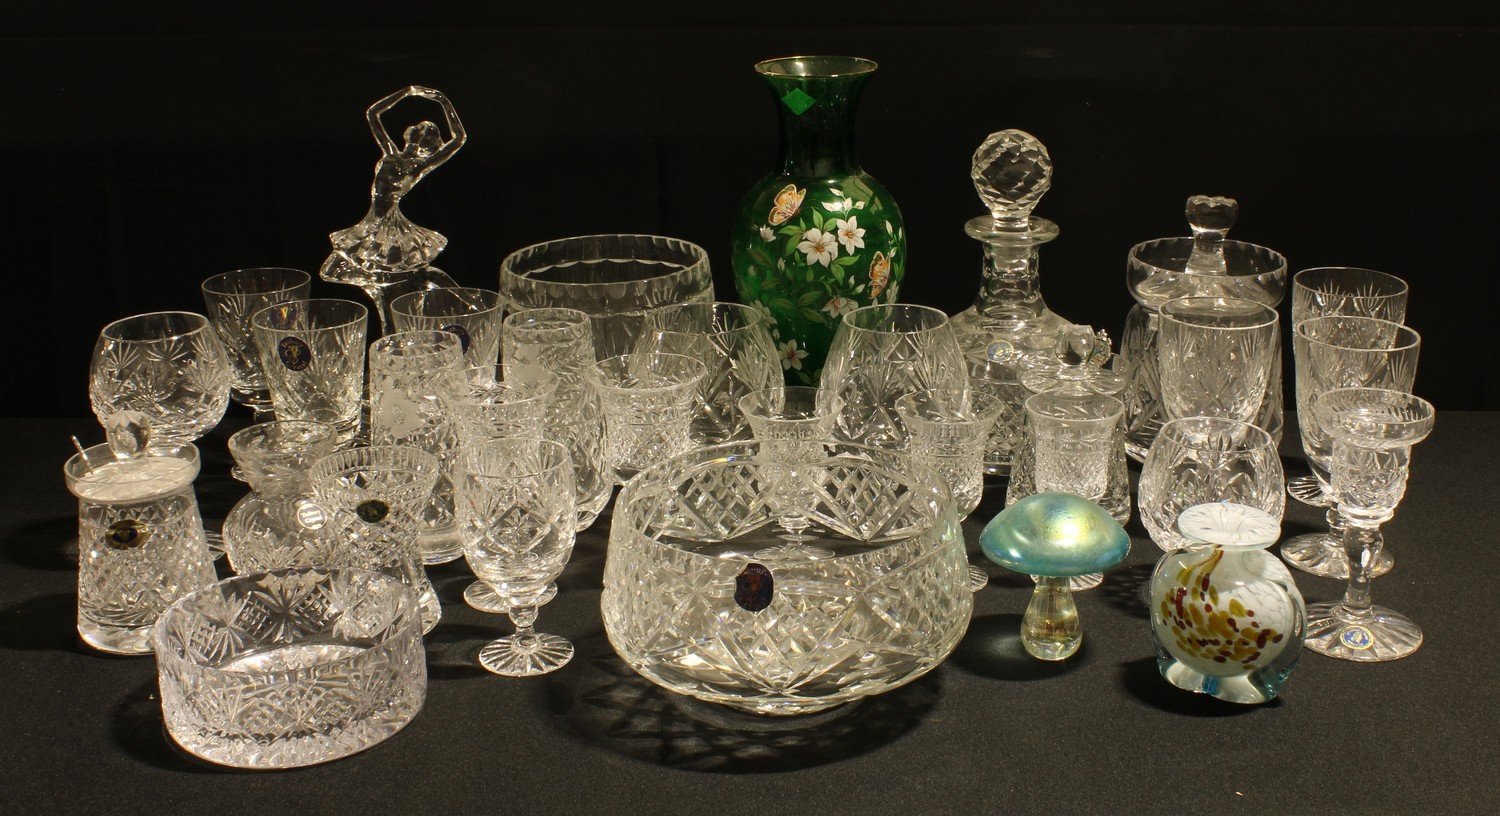 Glassware - Tutbury Crystal drinking glasses, fruit bowl, preserve jar; others similar; an